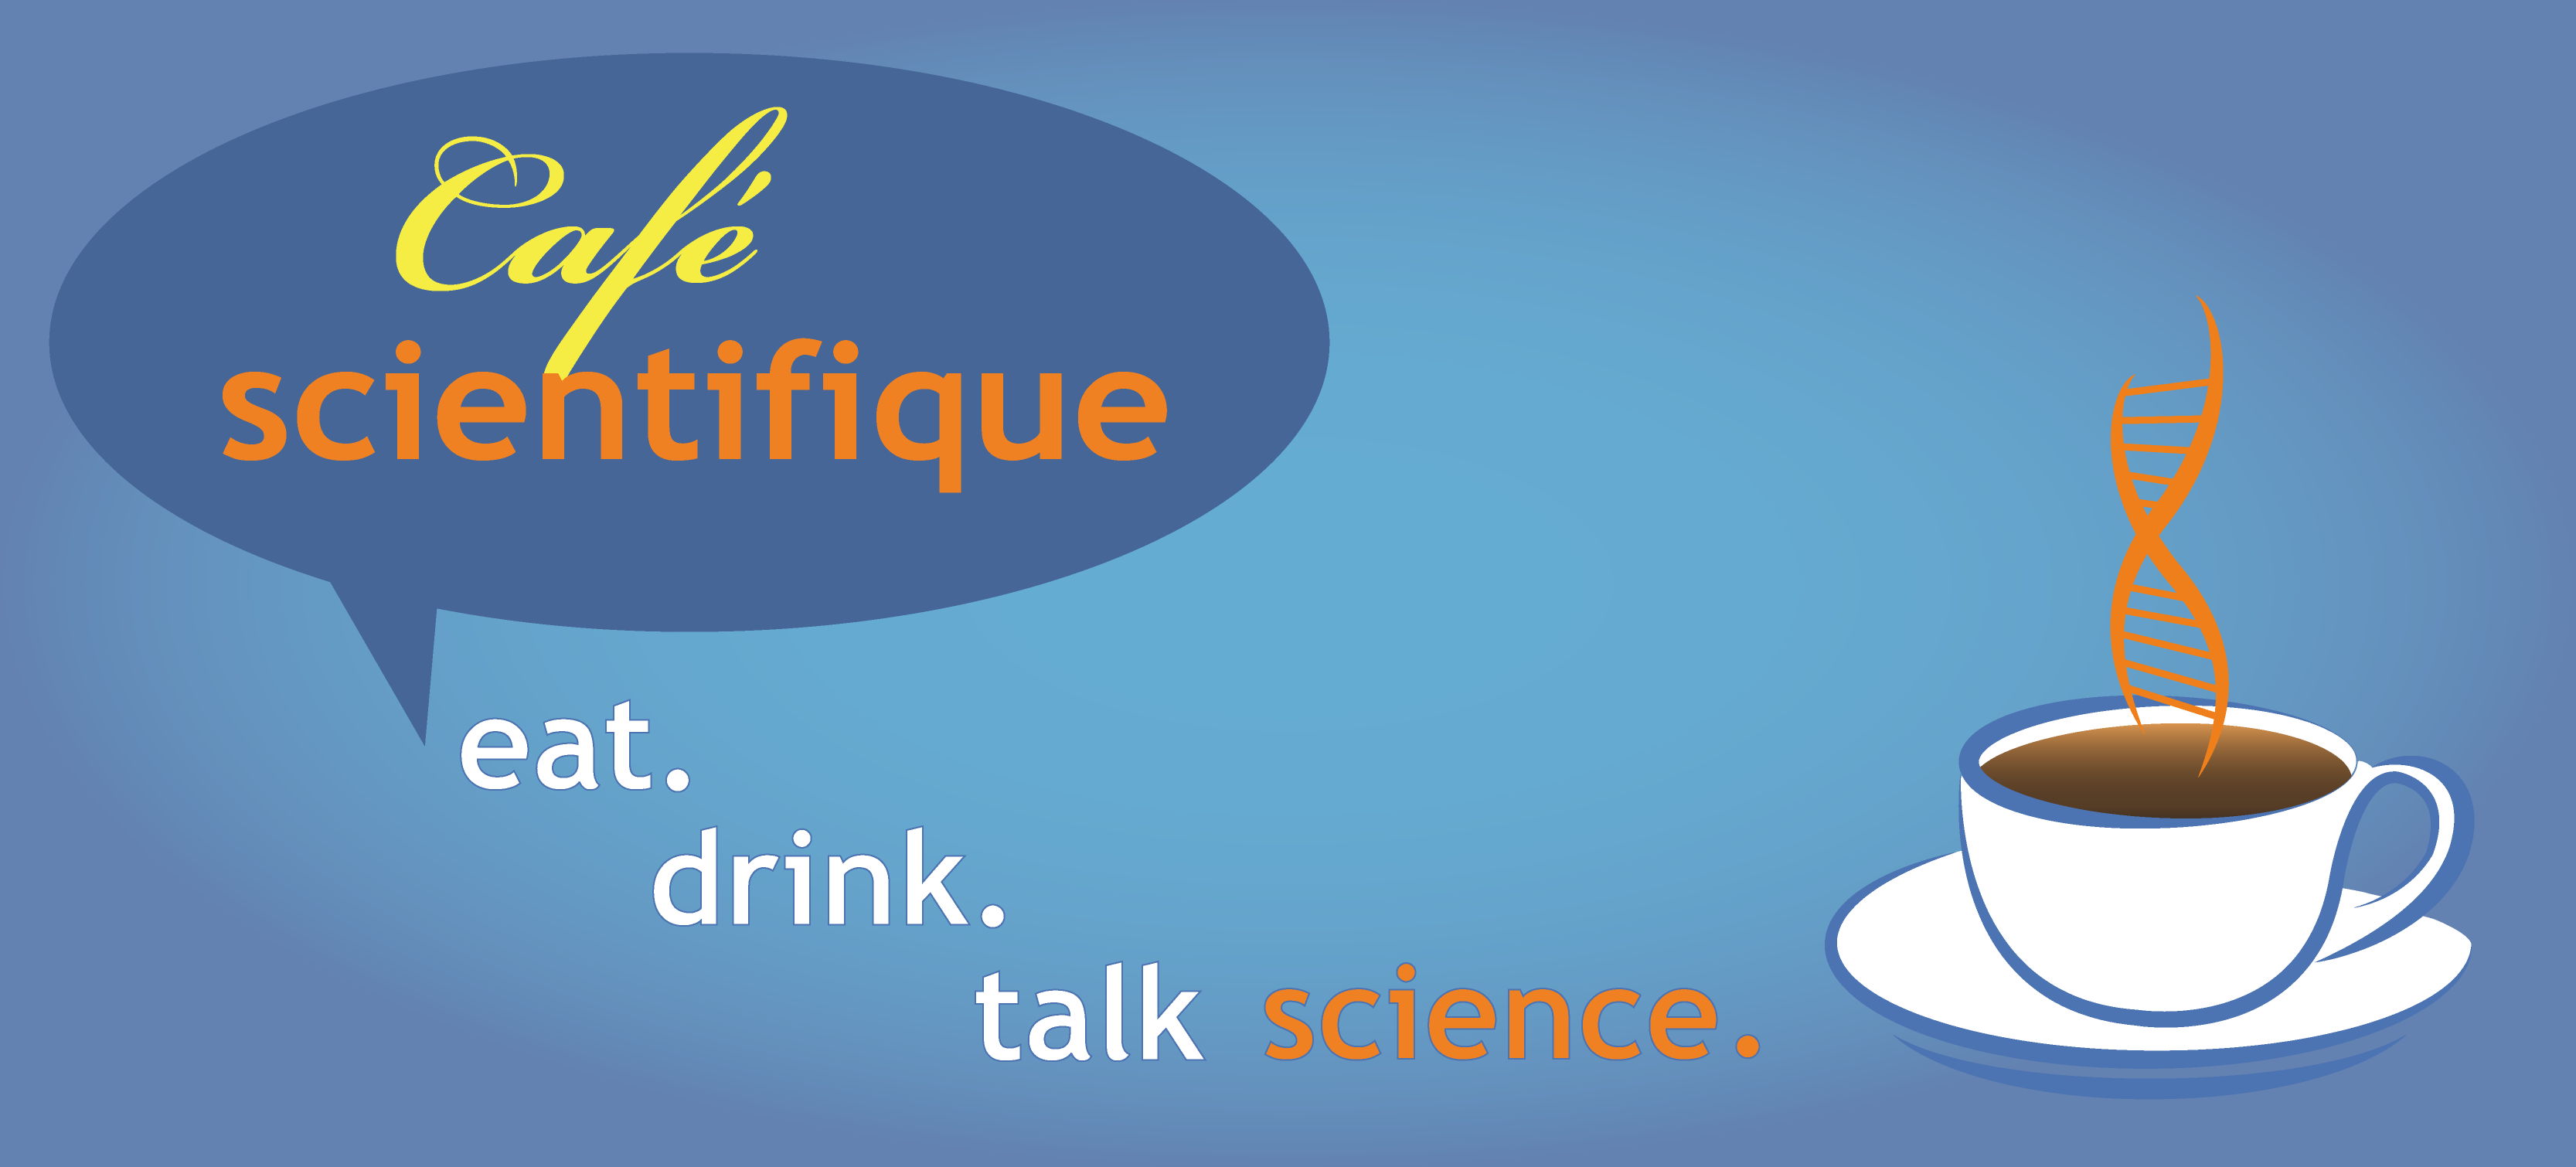 cafe scientifique. eat, drink, talk science.